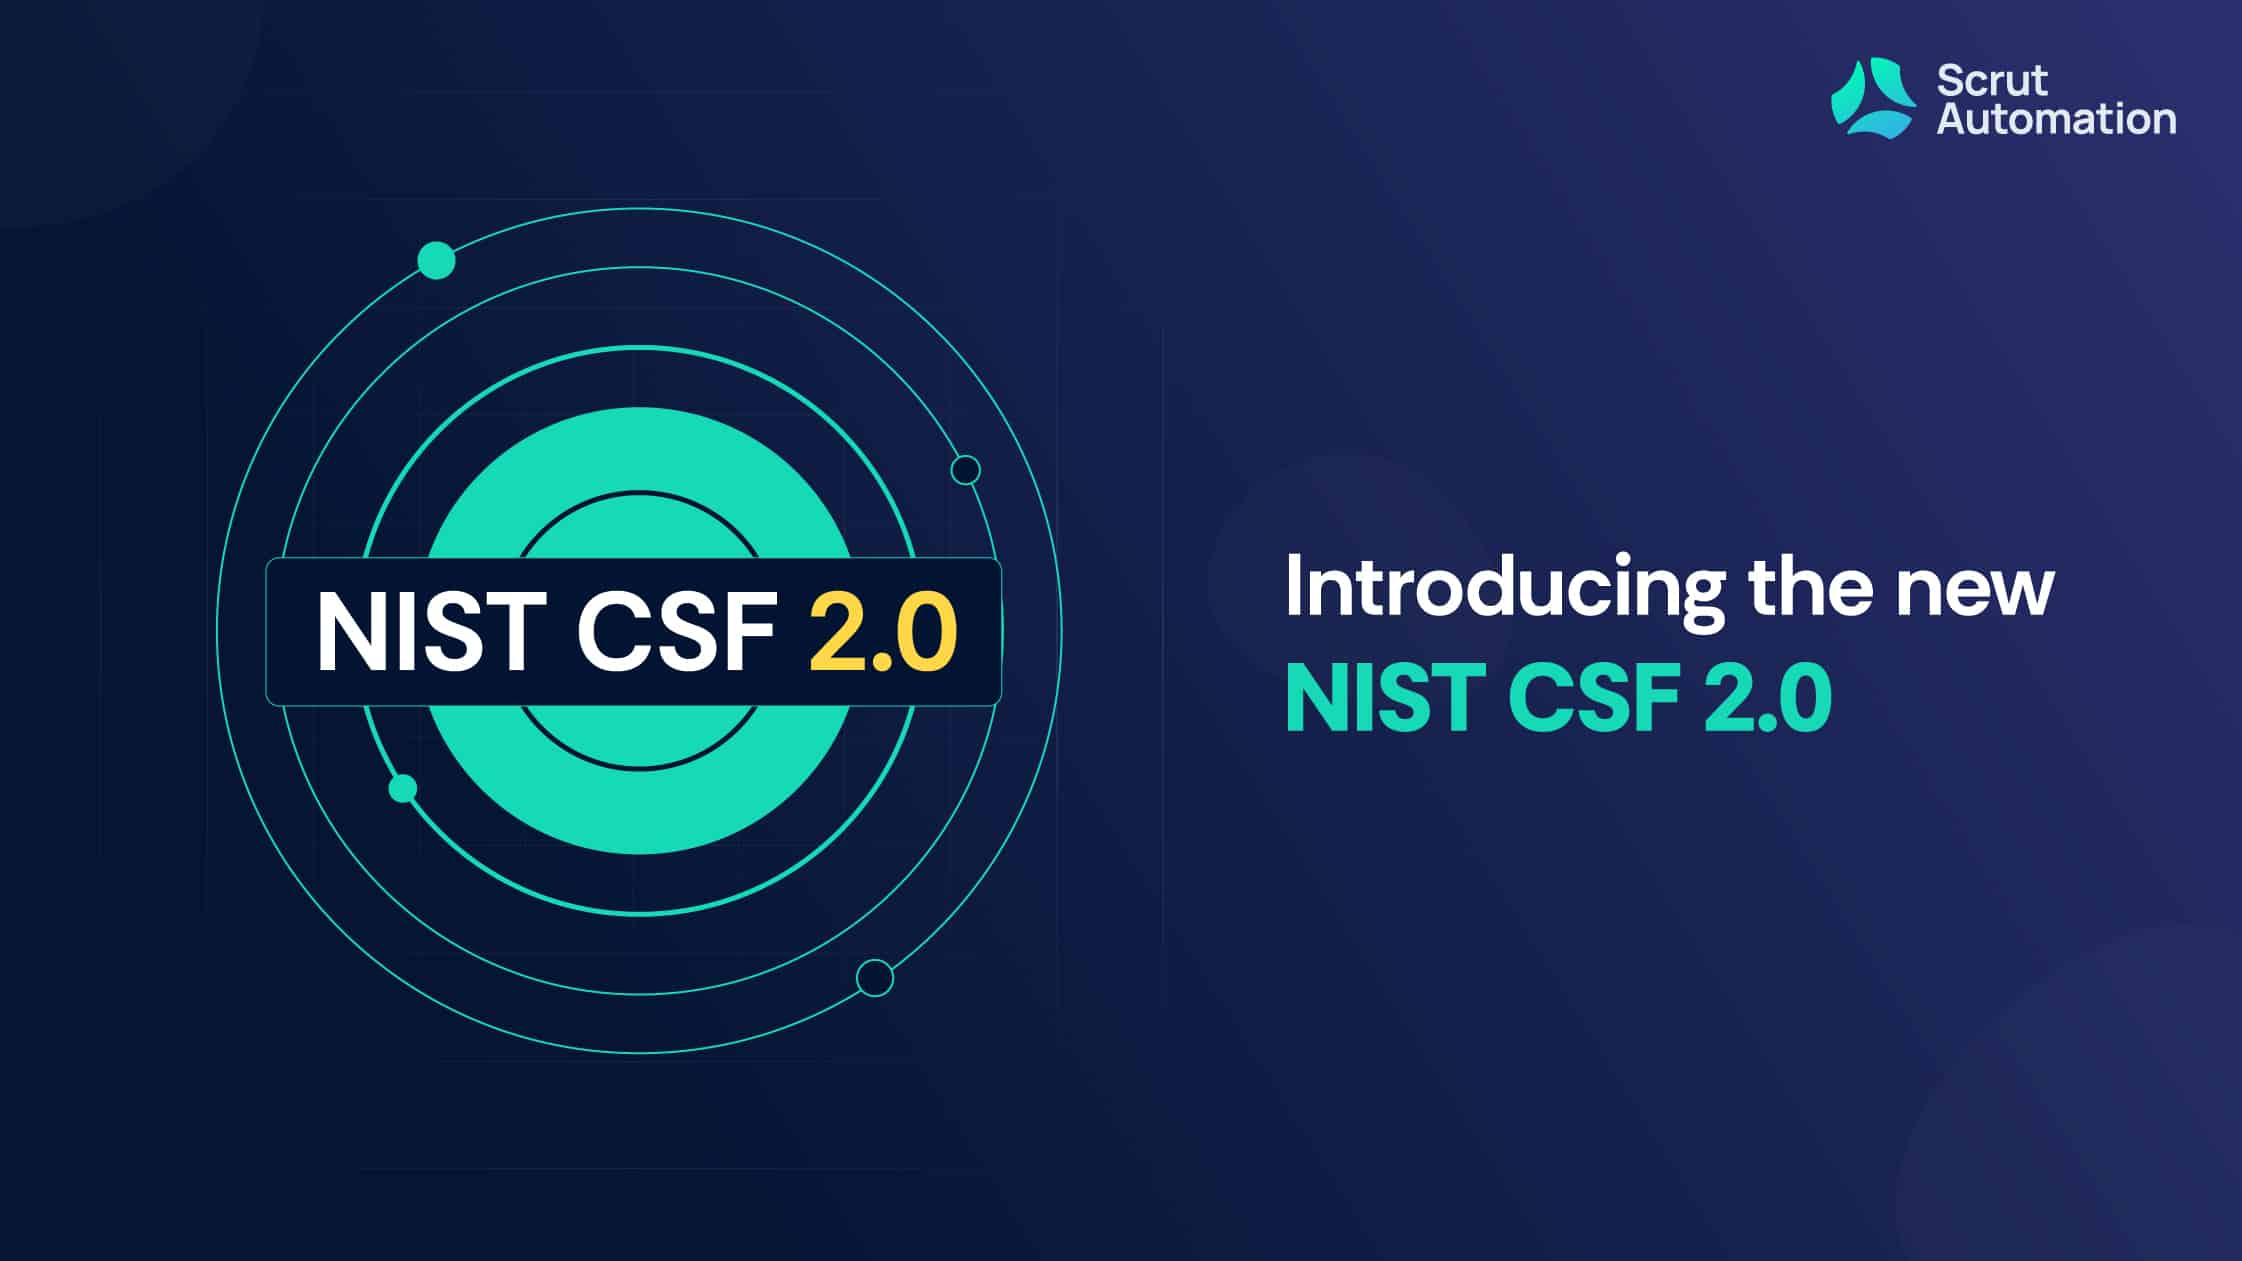 NIST CSF 2.0 - Four factors that set it apart from NIST CSF 1.1